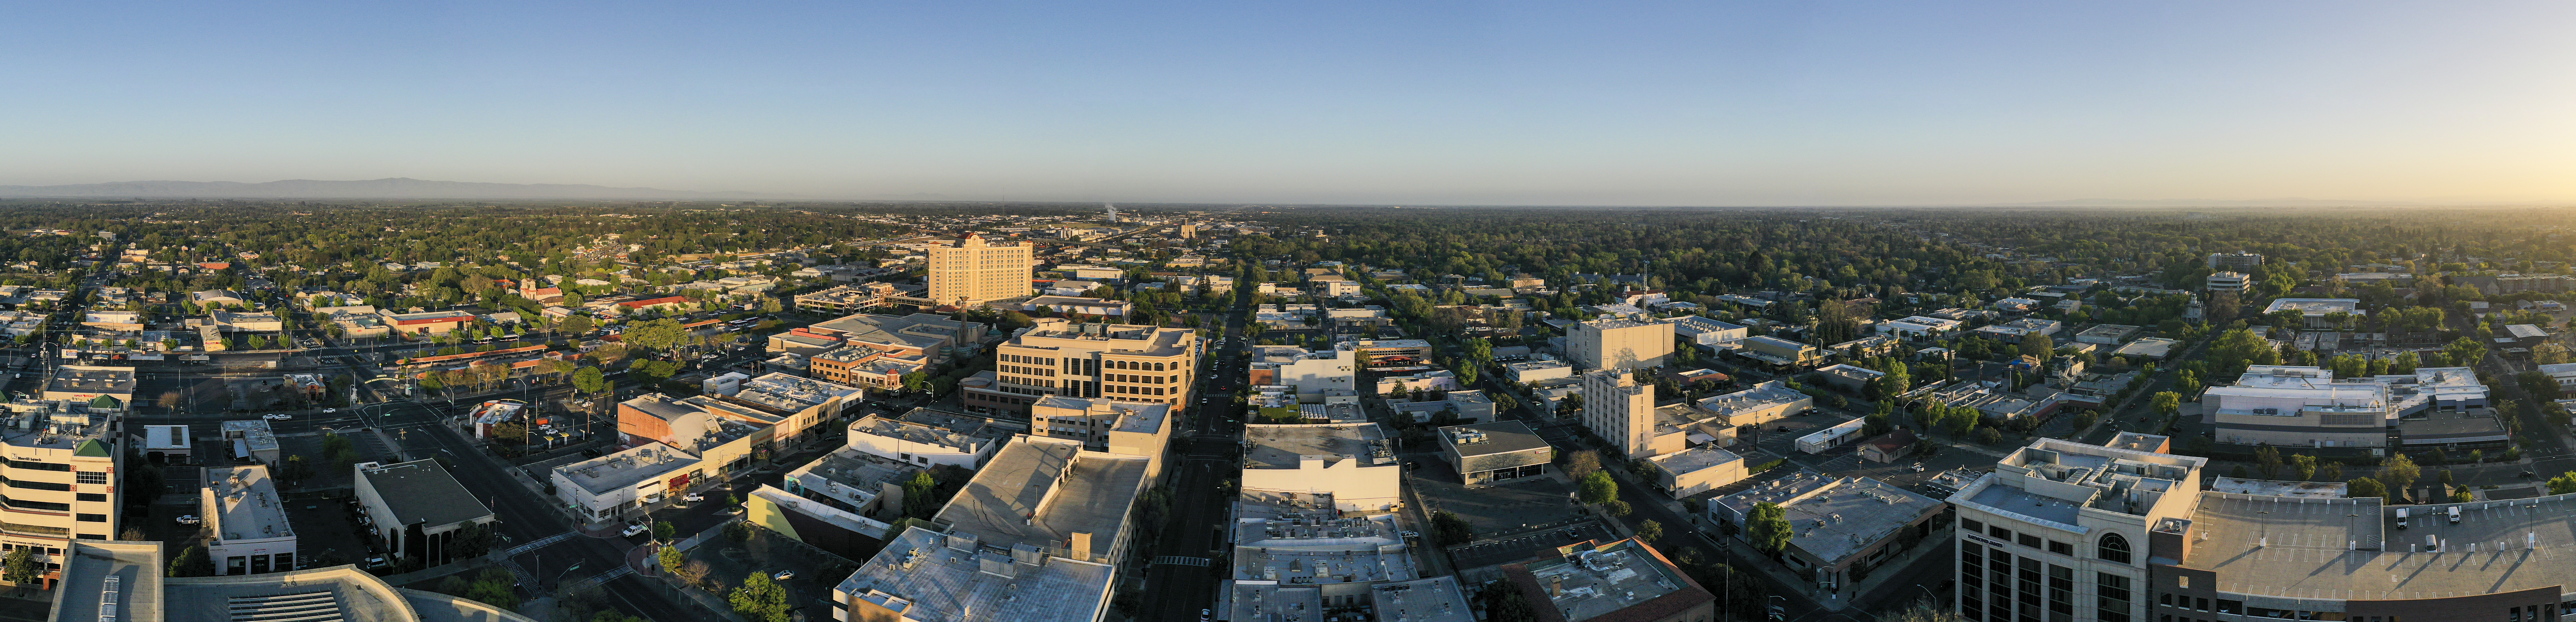 Cityscape panorama